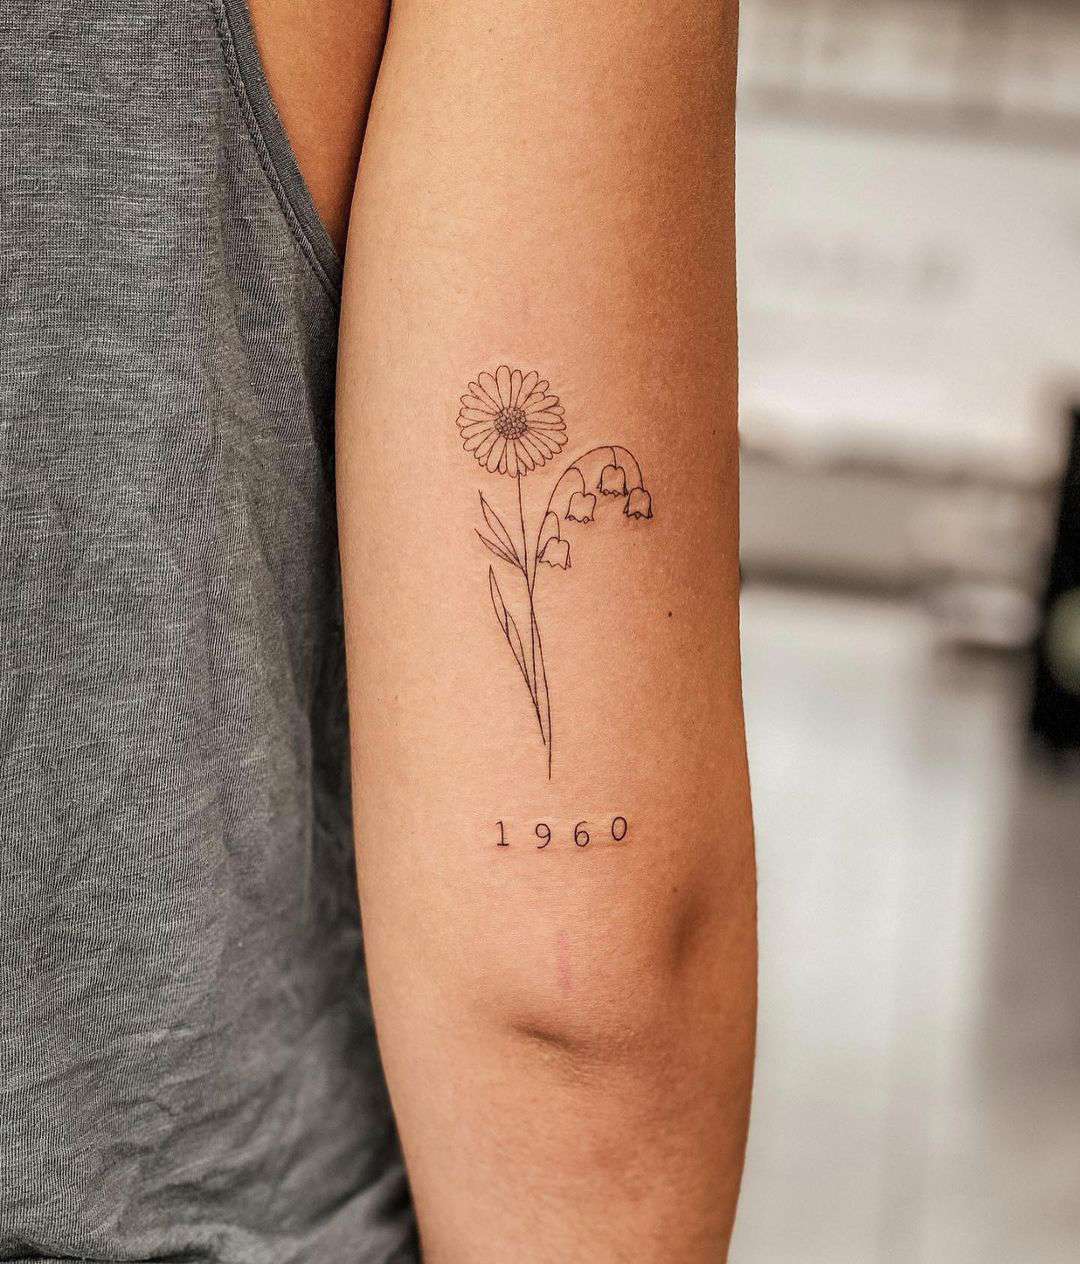 Tatuaje de flor minimalista: ideas bonitas y elegantes para tu piel